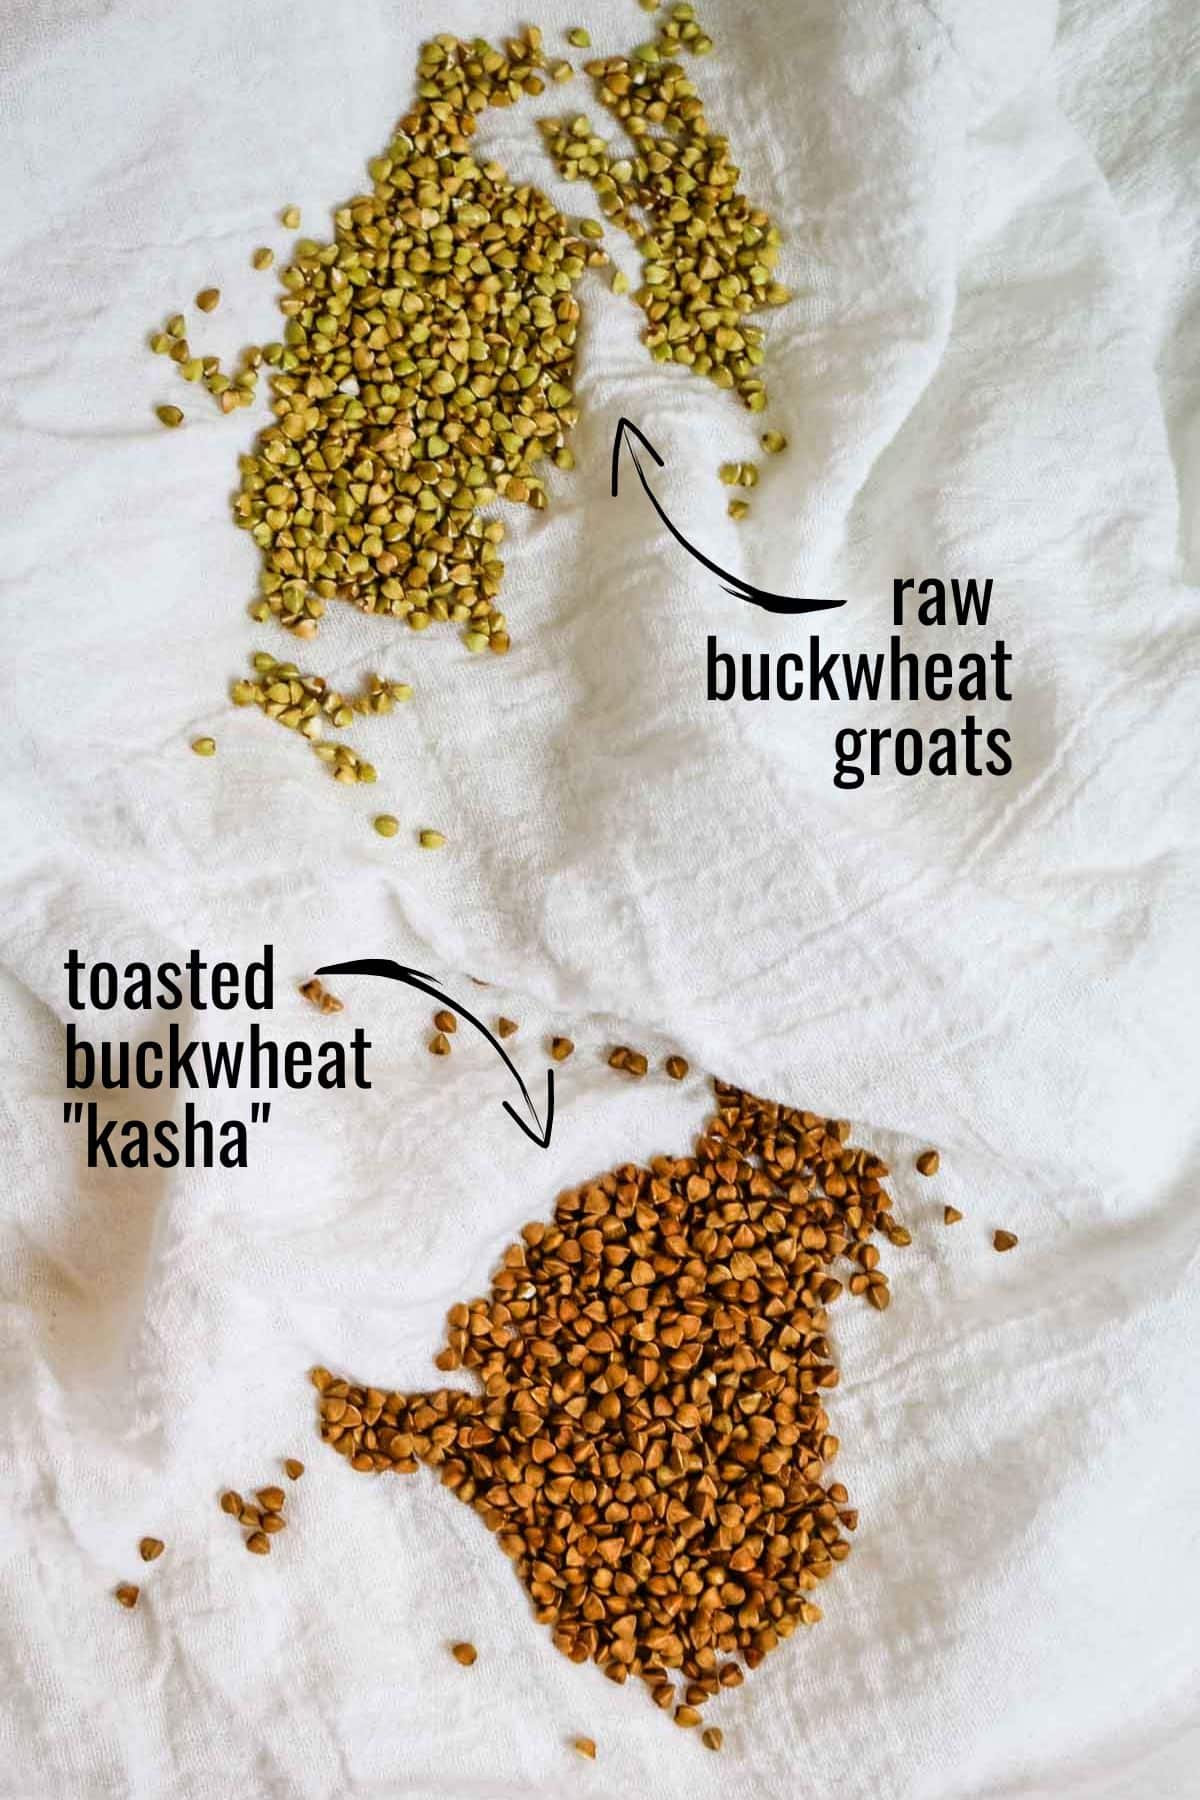 buckwheat groats and kasha on white towel.